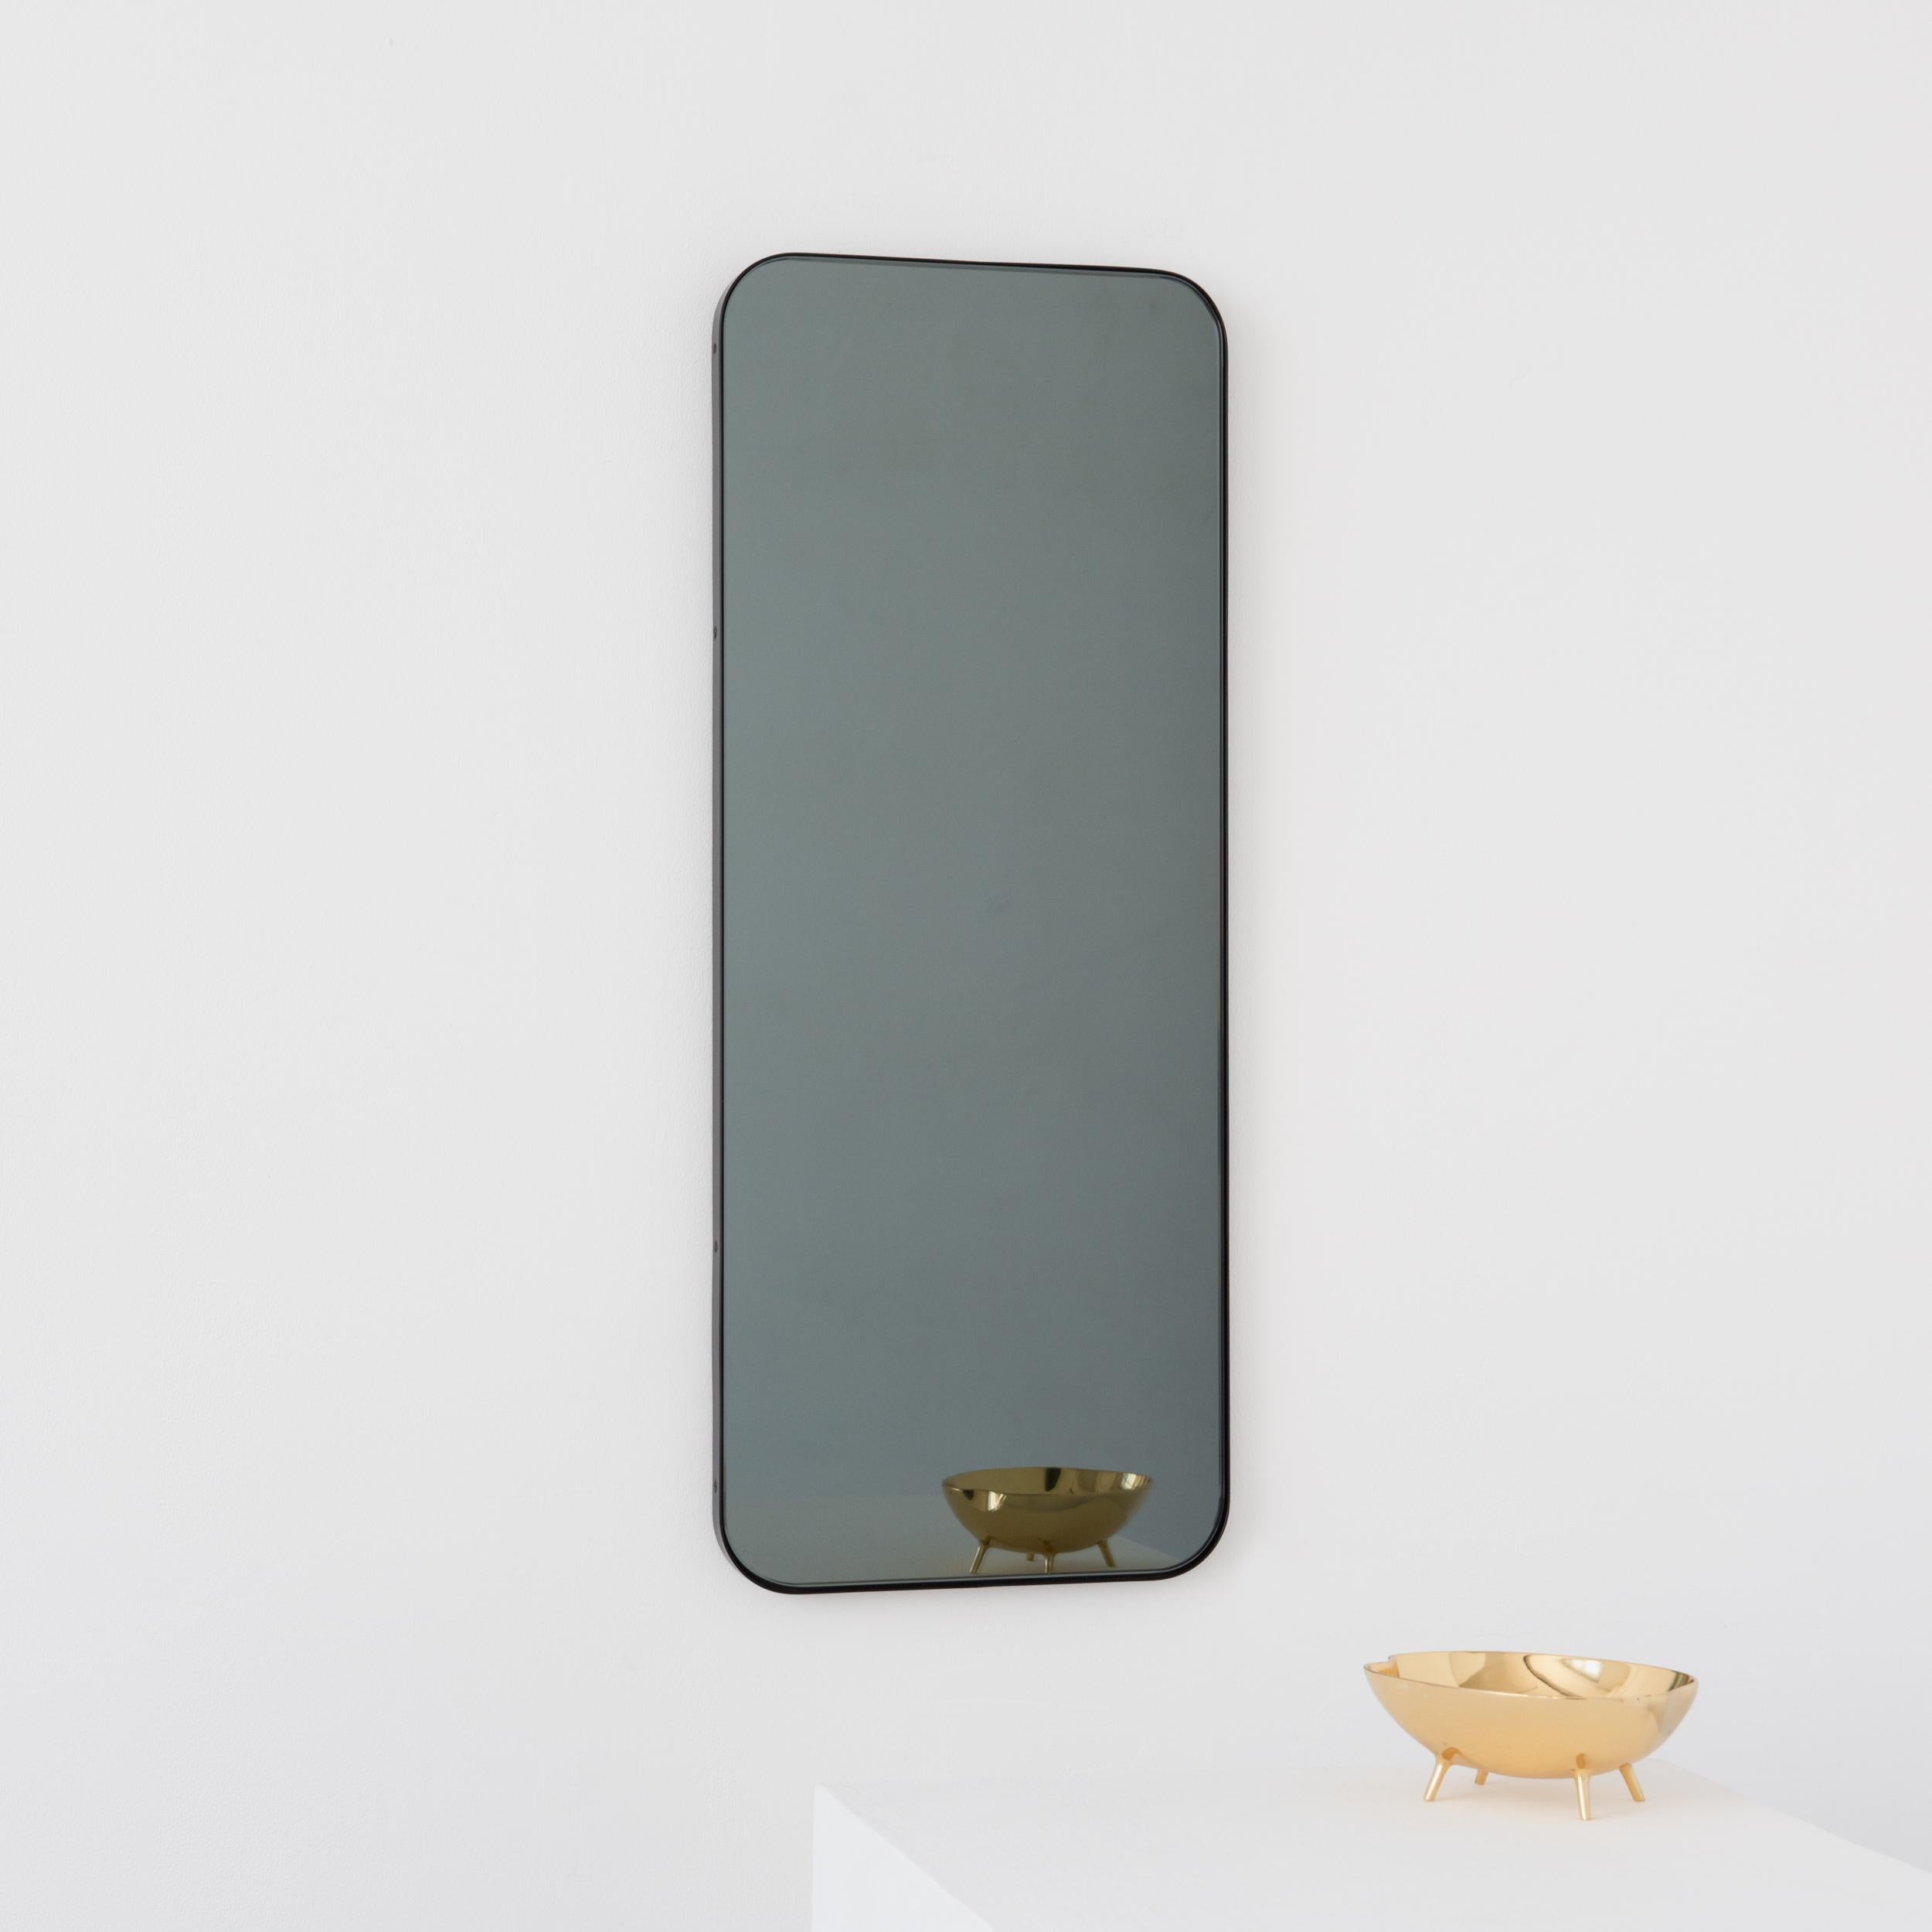 Britannique Quadris Black Tinted Rectangular Modern Mirror with a Black Frame, Small (miroir rectangulaire teinté noir avec cadre noir) en vente